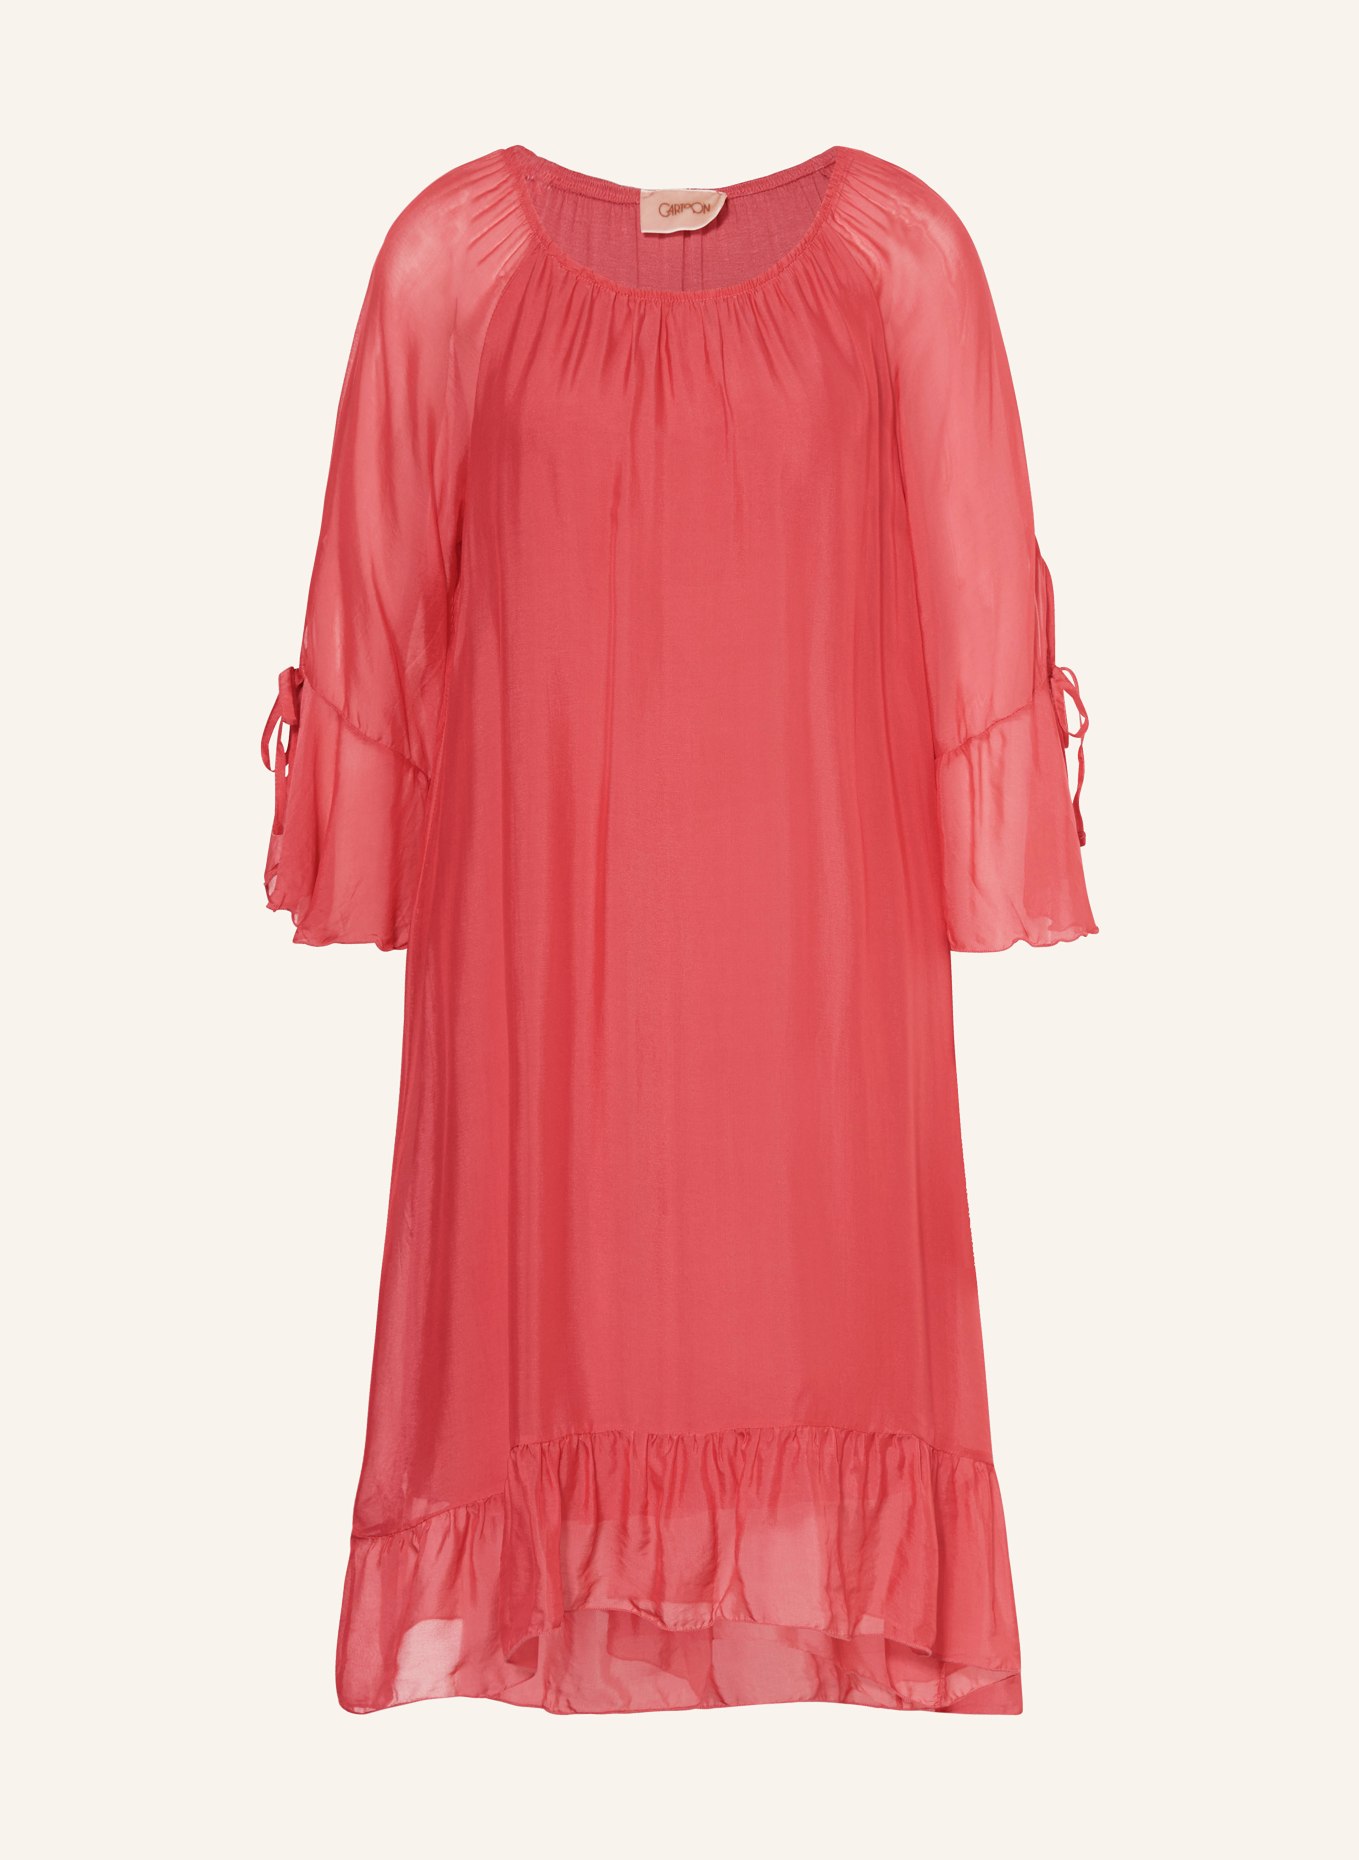 CARTOON Kleid mit 3/4-Arm, Farbe: HELLROT (Bild 1)